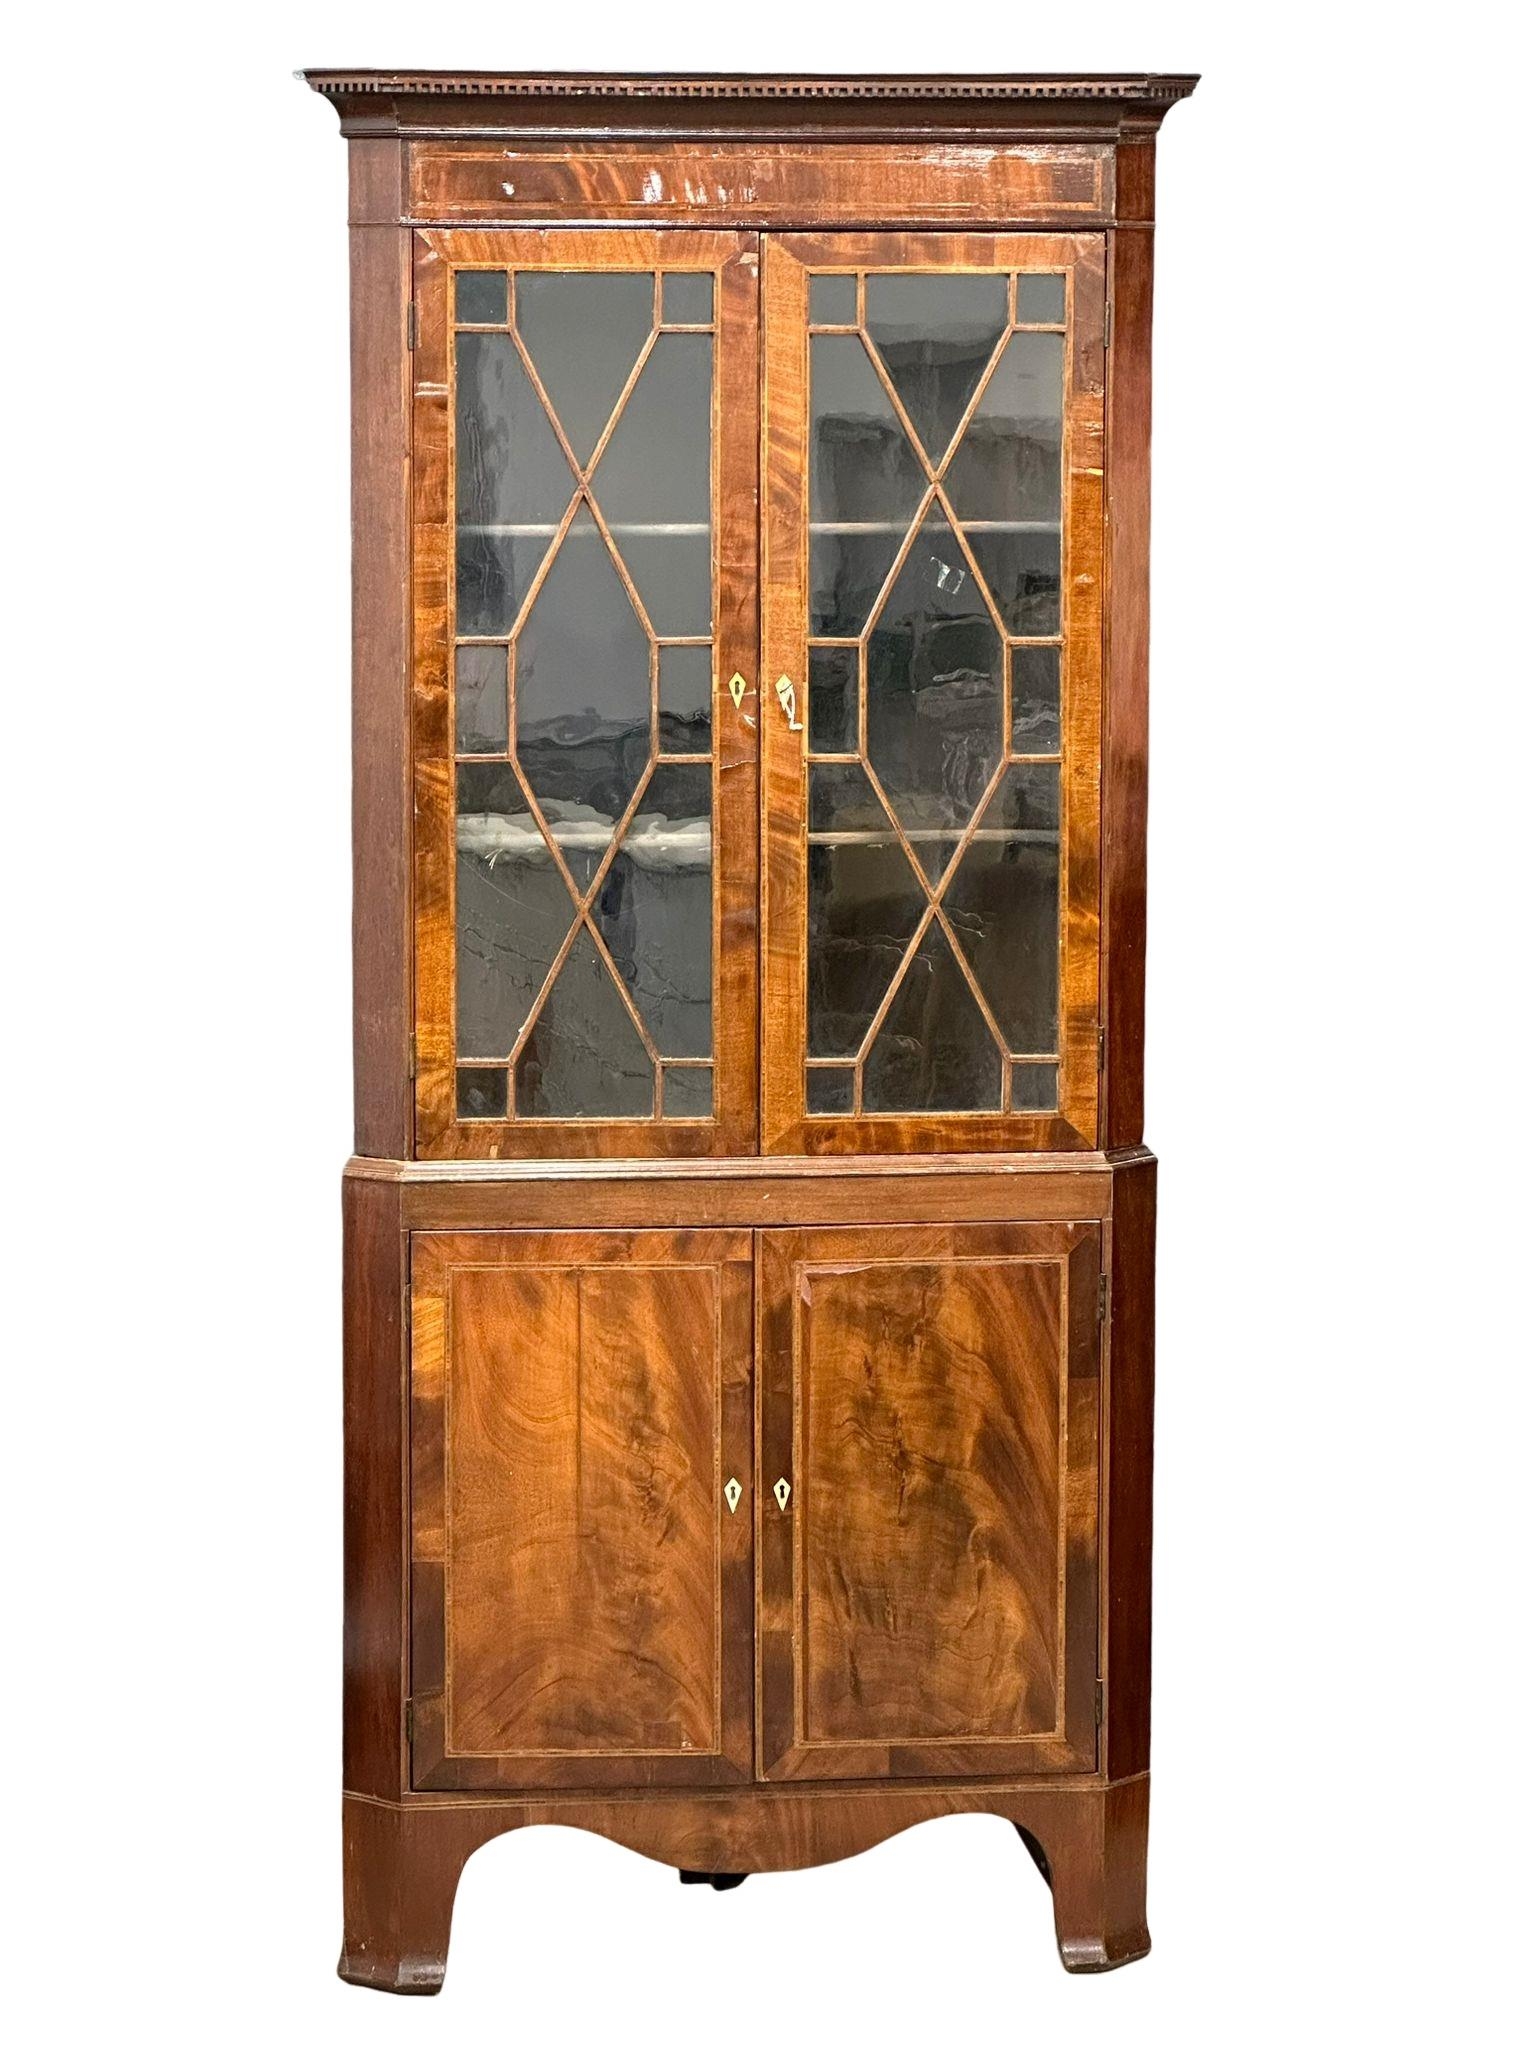 A George III inlaid mahogany corner display cabinet with astragal glazed doors. Circa 1800.